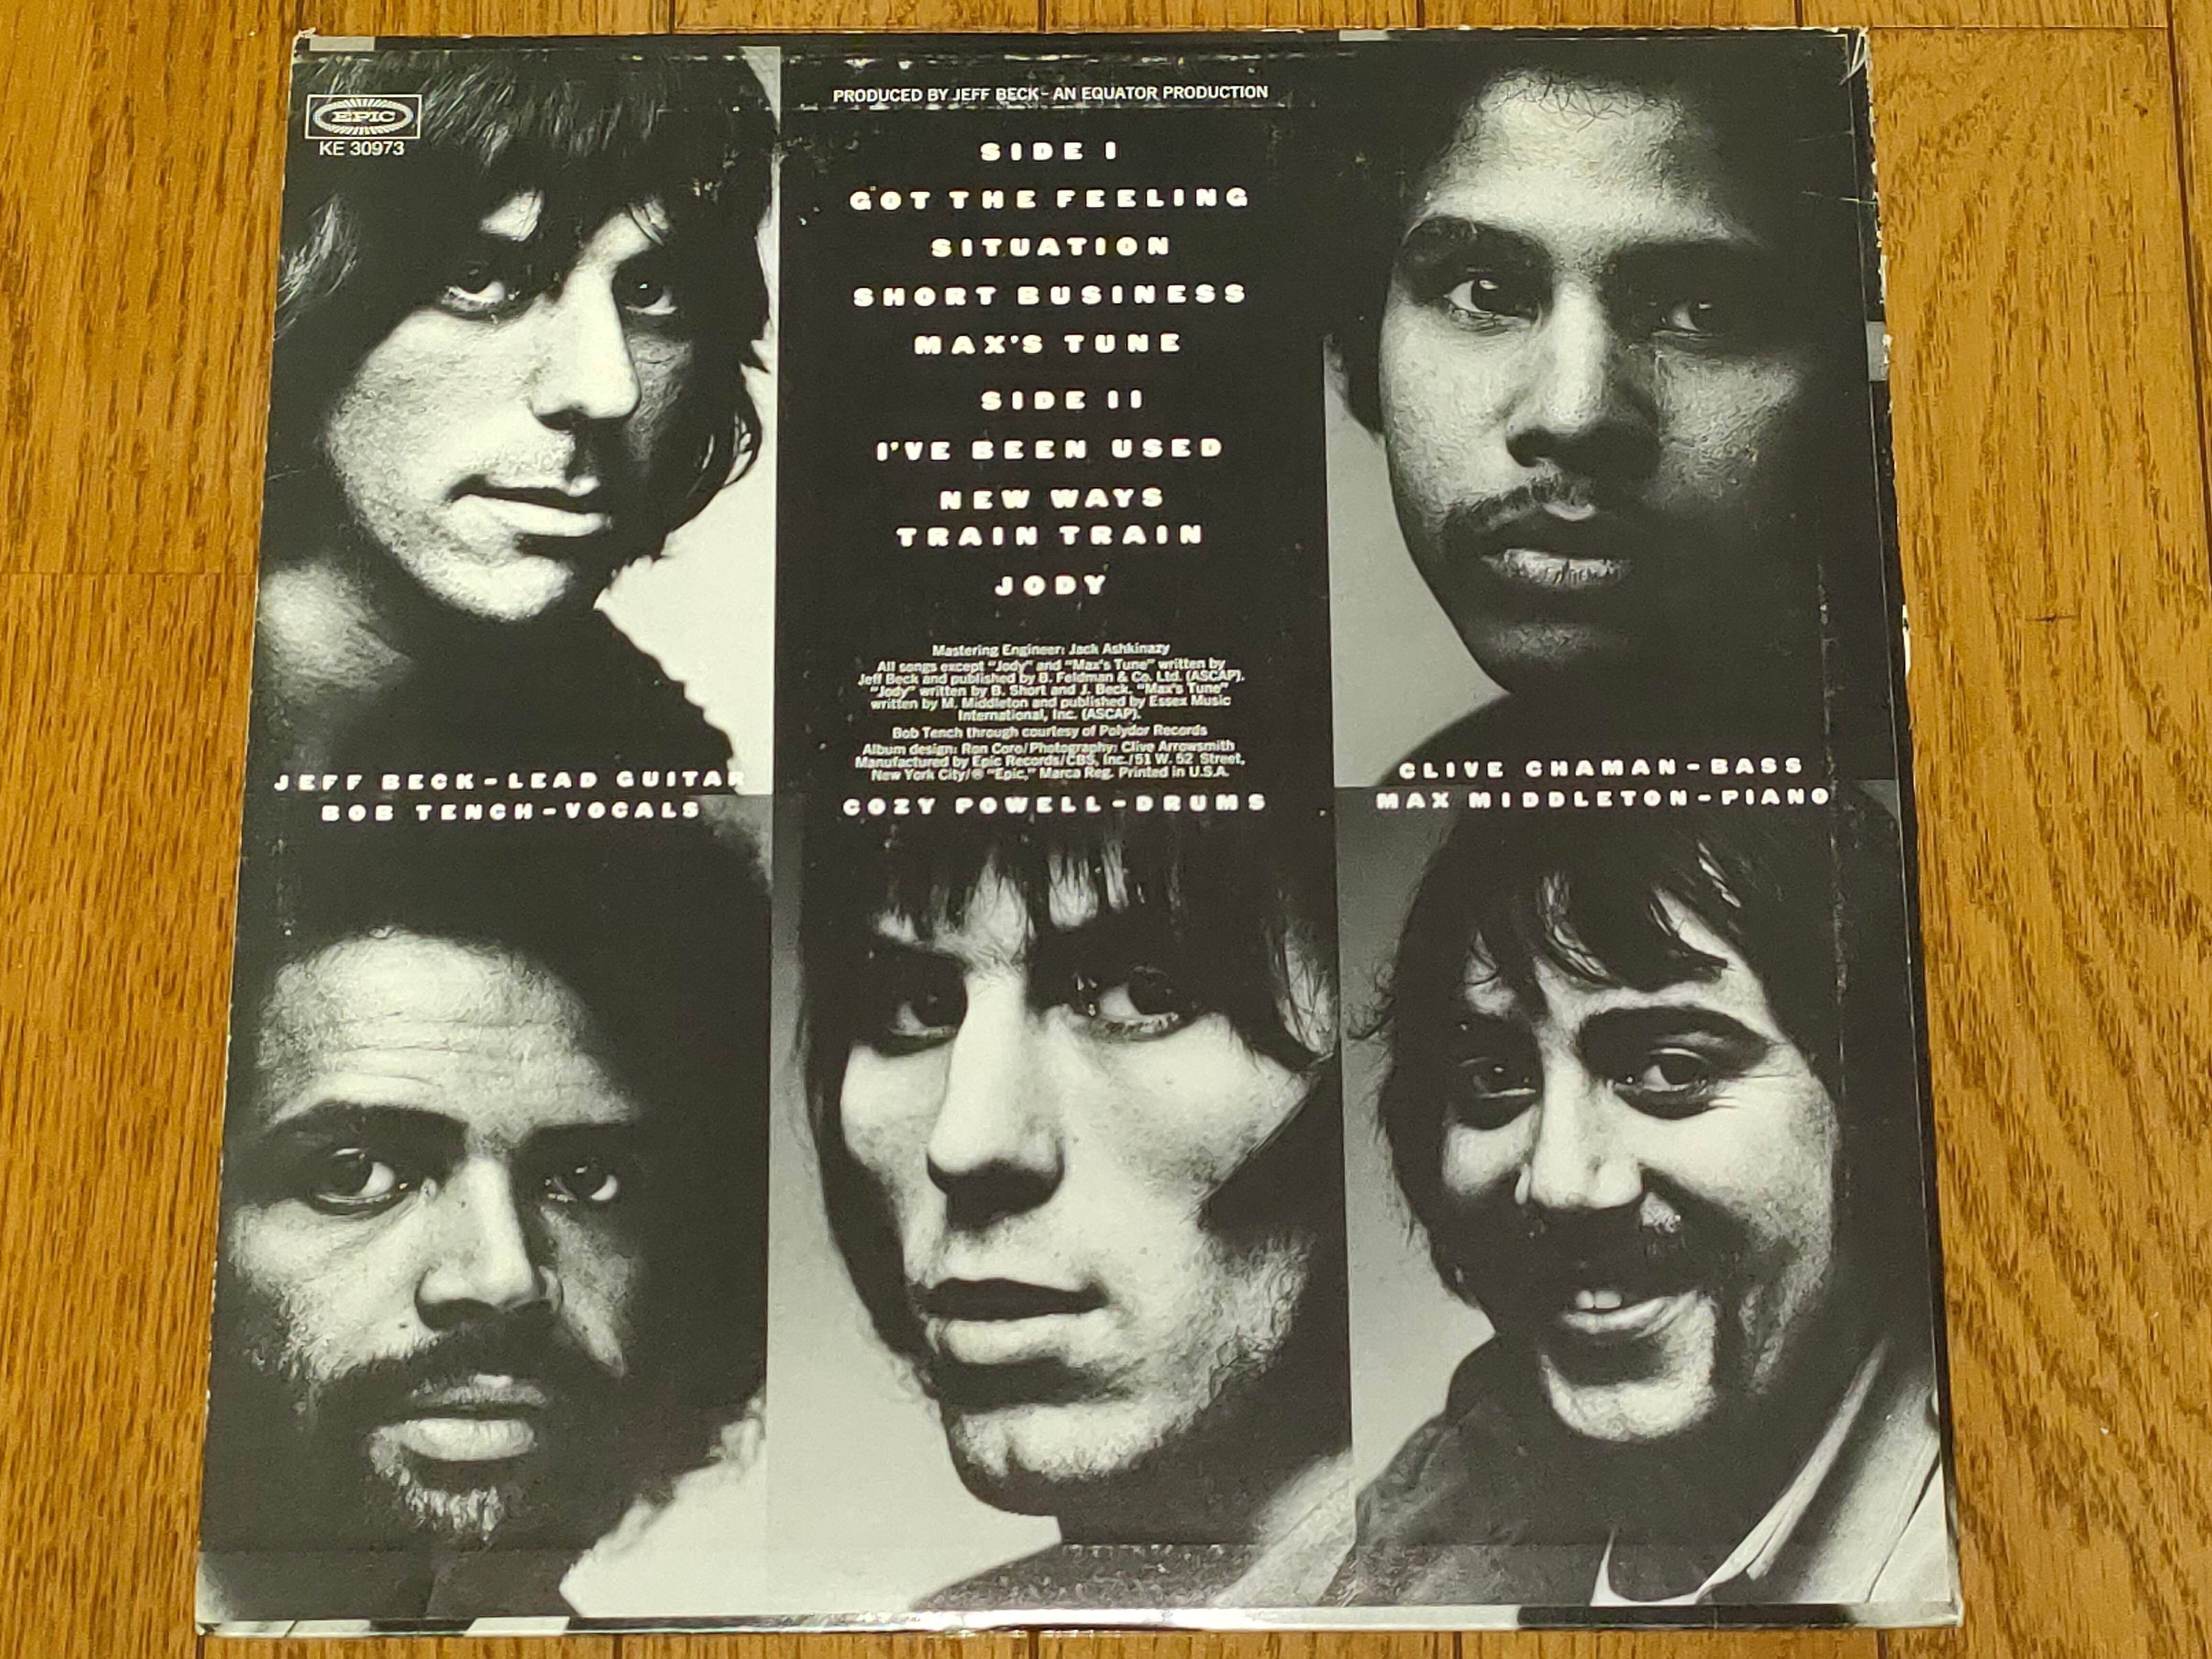 Rough and Ready】(1971) Jeff Beck Group ブラックミュージックを 